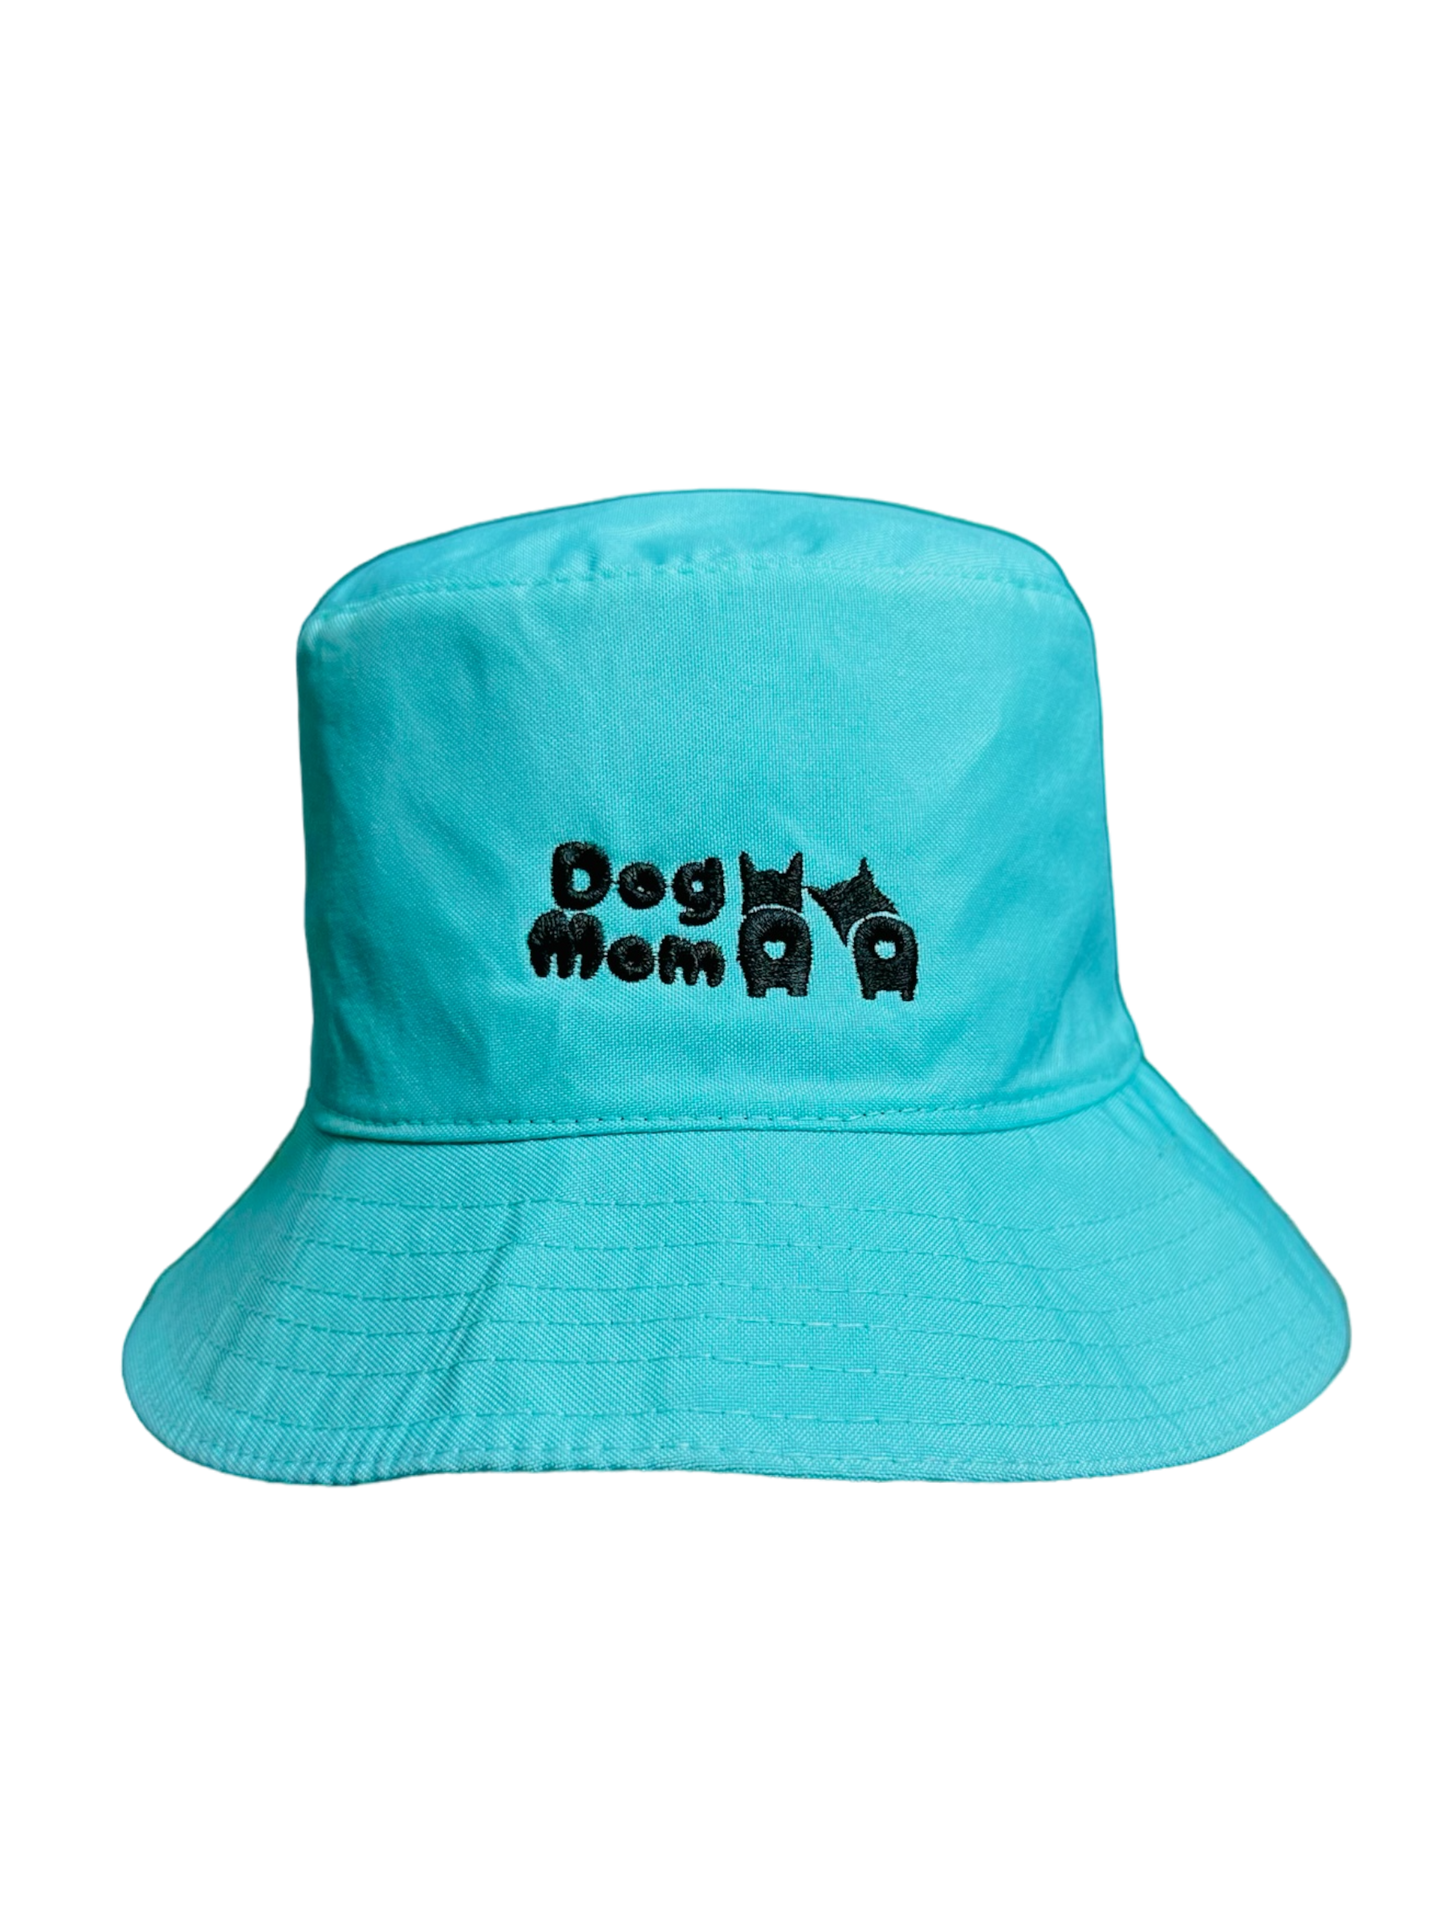 "In My Dog Mom Era" - Bucket Hat